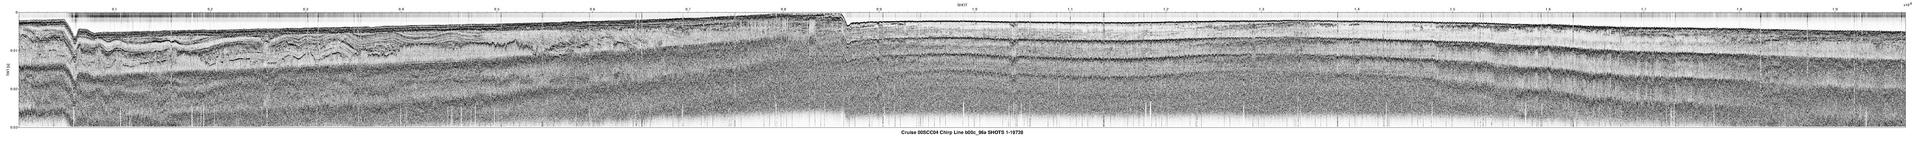 00SCC04 b00c_96a seismic profile image